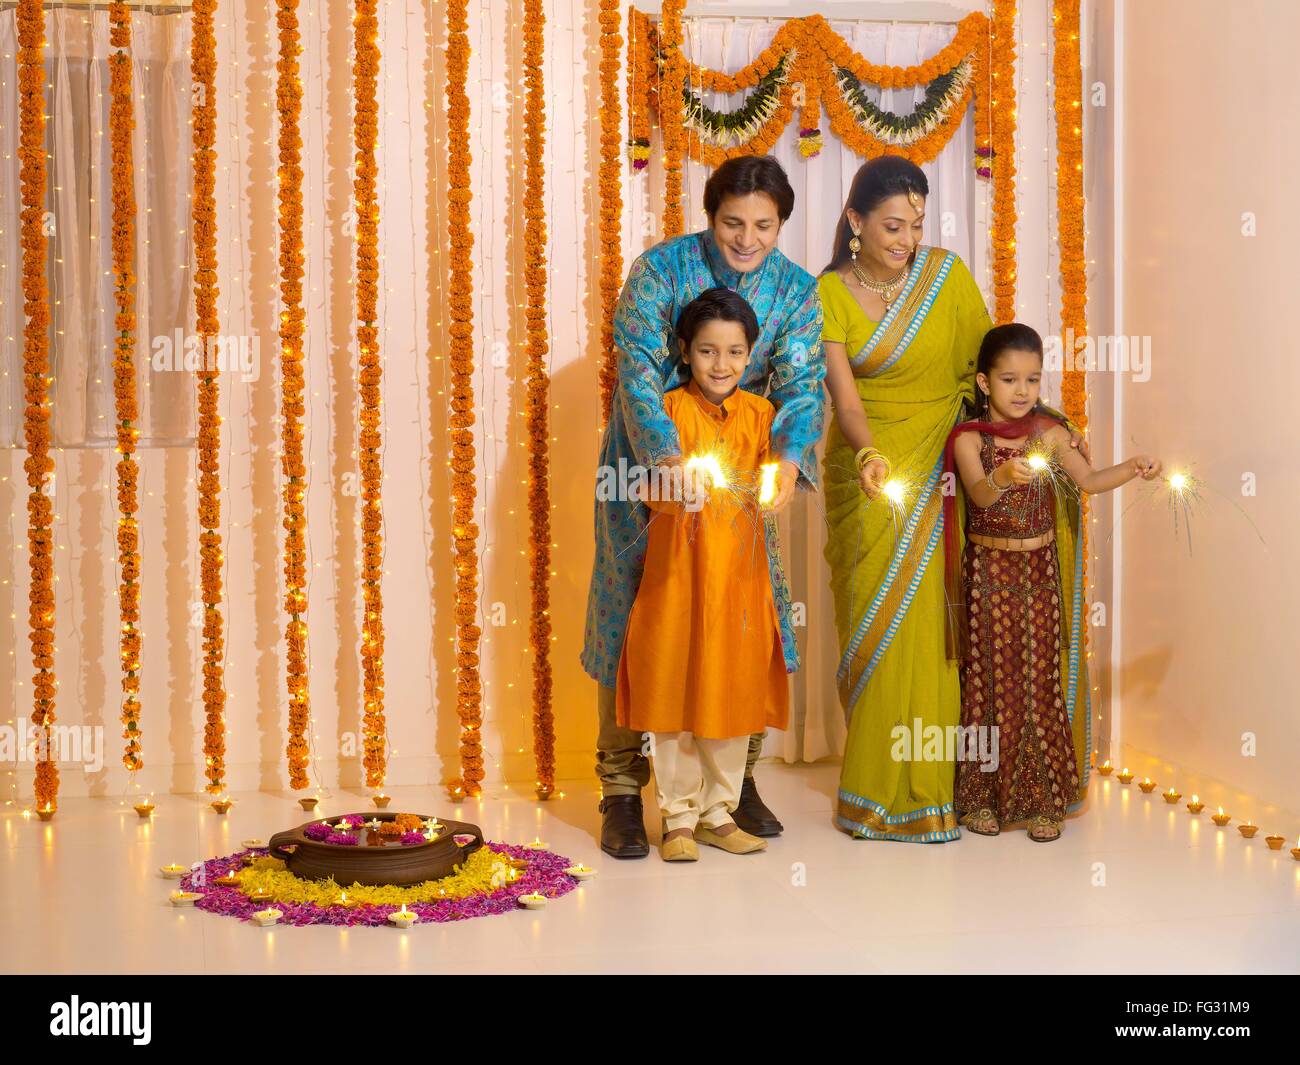 Indische Familie feiern Diwali Lichterfest Indien - Model Released HERR #779 P, HERR #779 Q, HERR #779 R, HERR #779 S Stockfoto